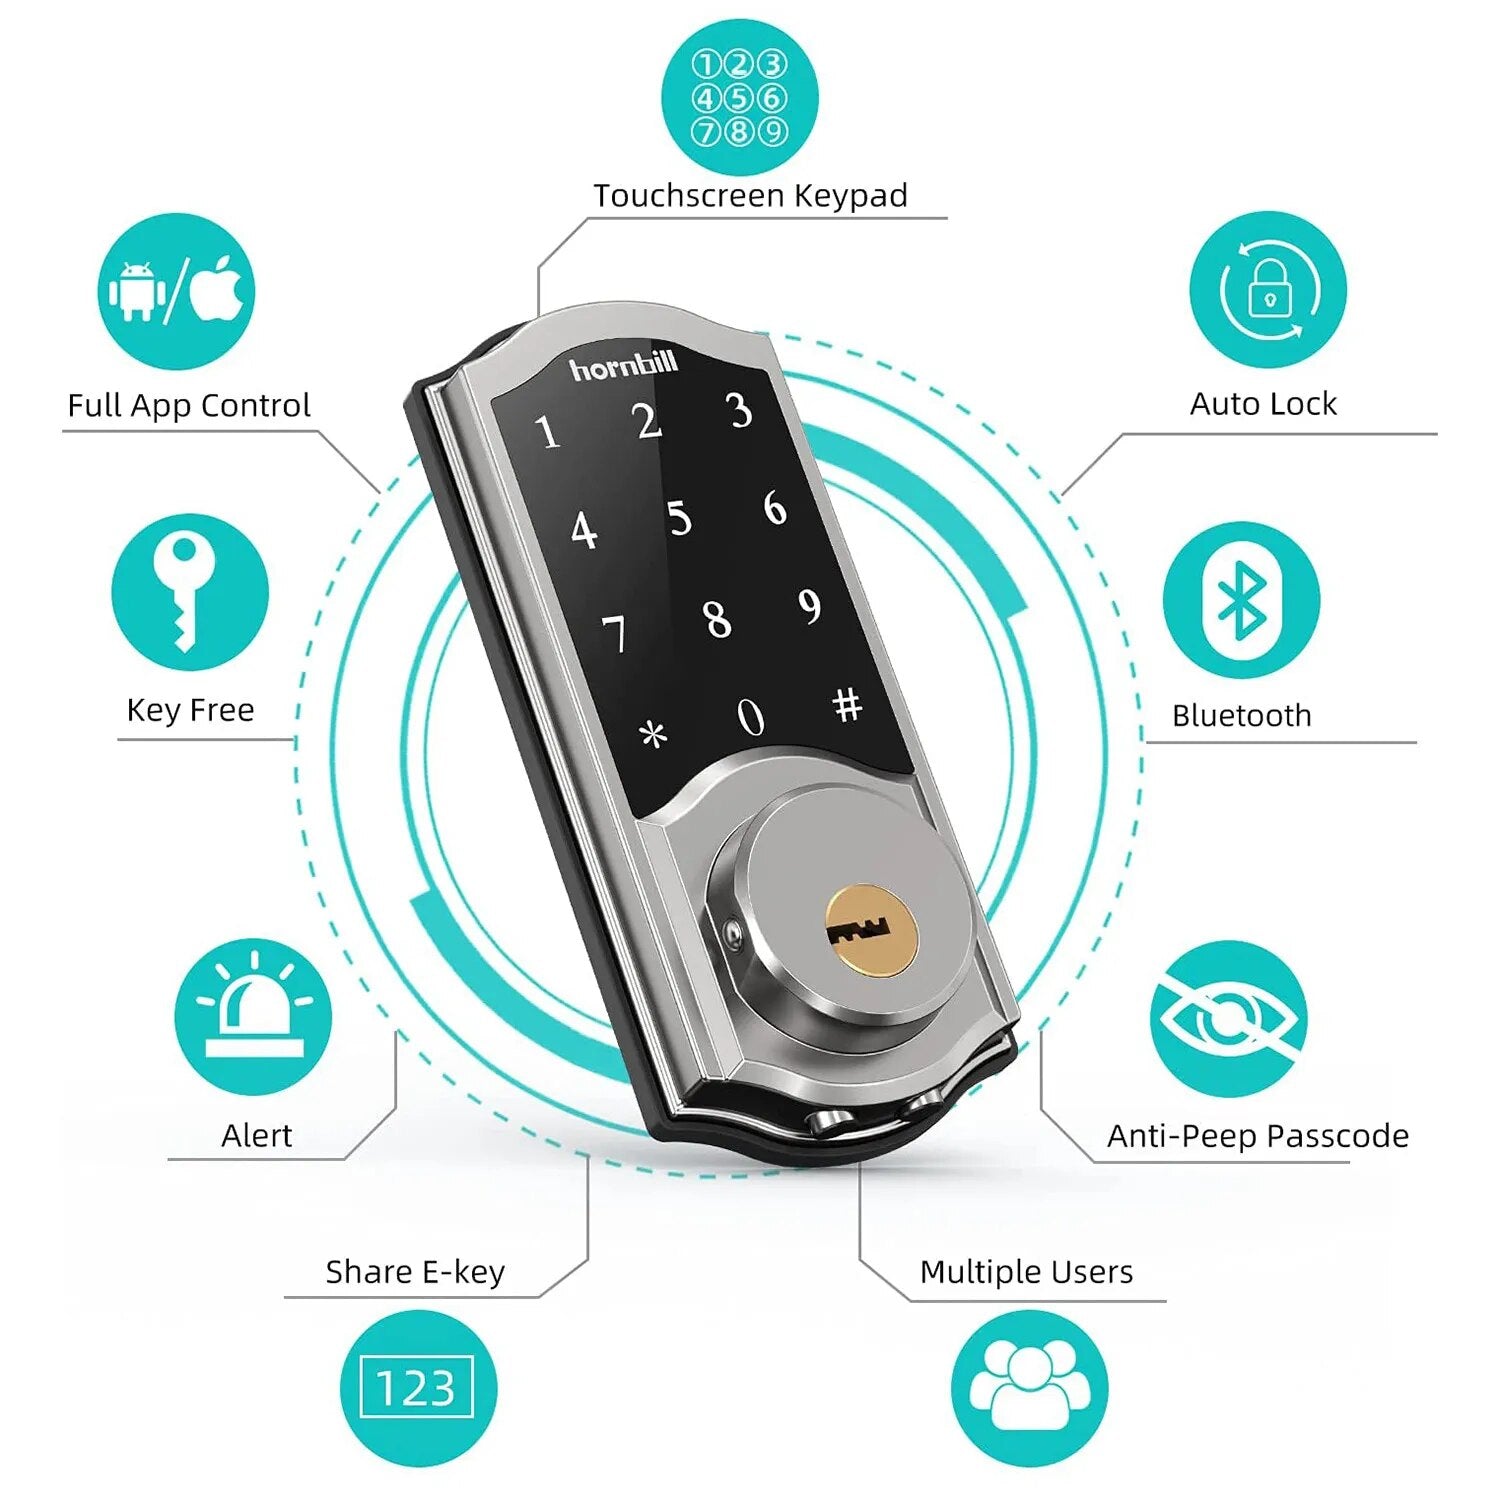 Hornbill Electronic WiFi Smart Door Lock With Gateway Remote Unlock Bluetooth Password Keyless Entry Locks For TTlock Home Safe - RY MARKET PLACE